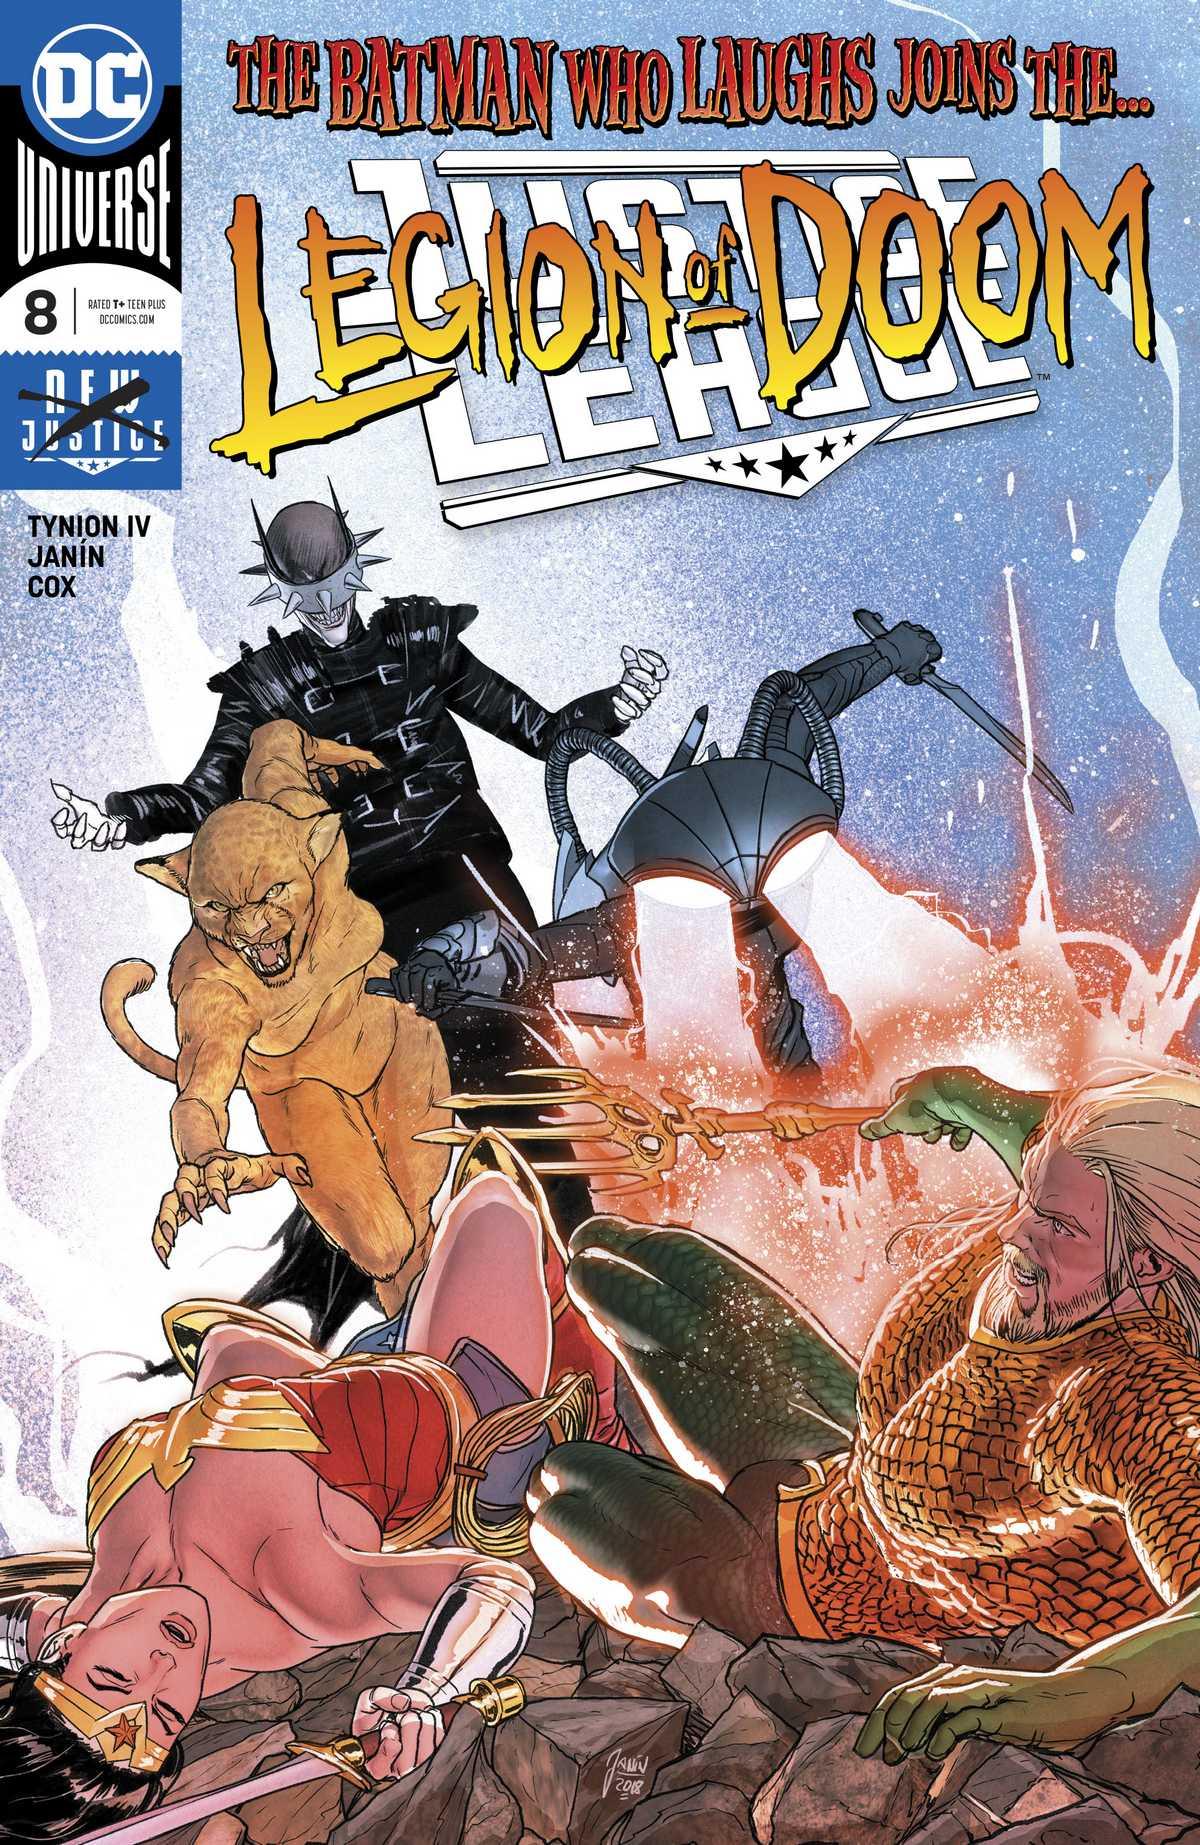 Justice League Vol. 4 #8